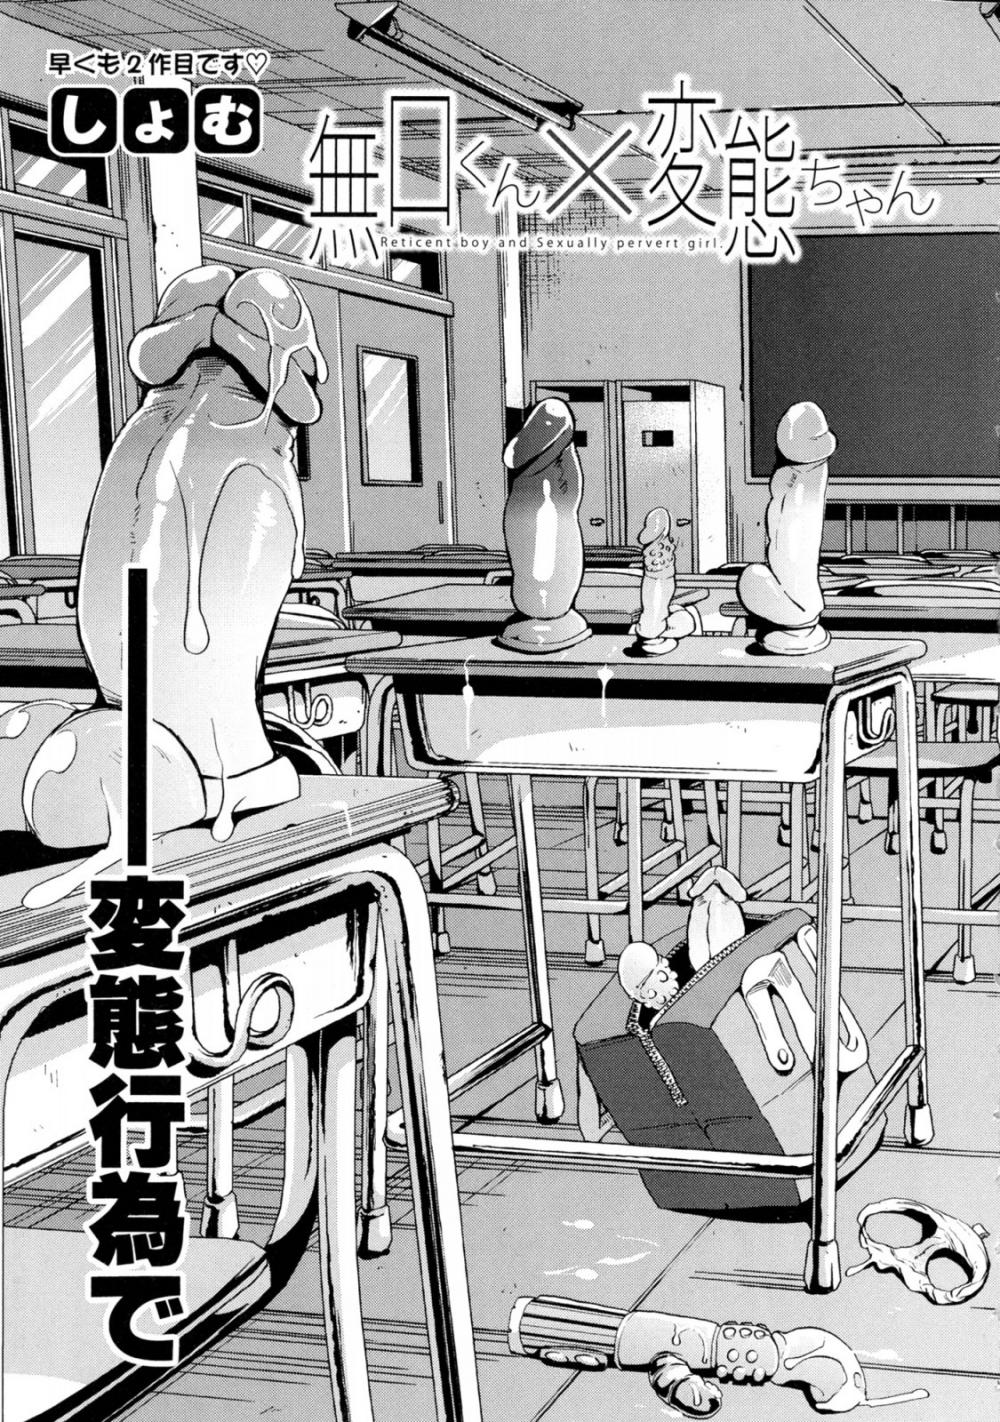 Hentai Manga Comic-Reticent boy and Sexually pervert girl-Read-3